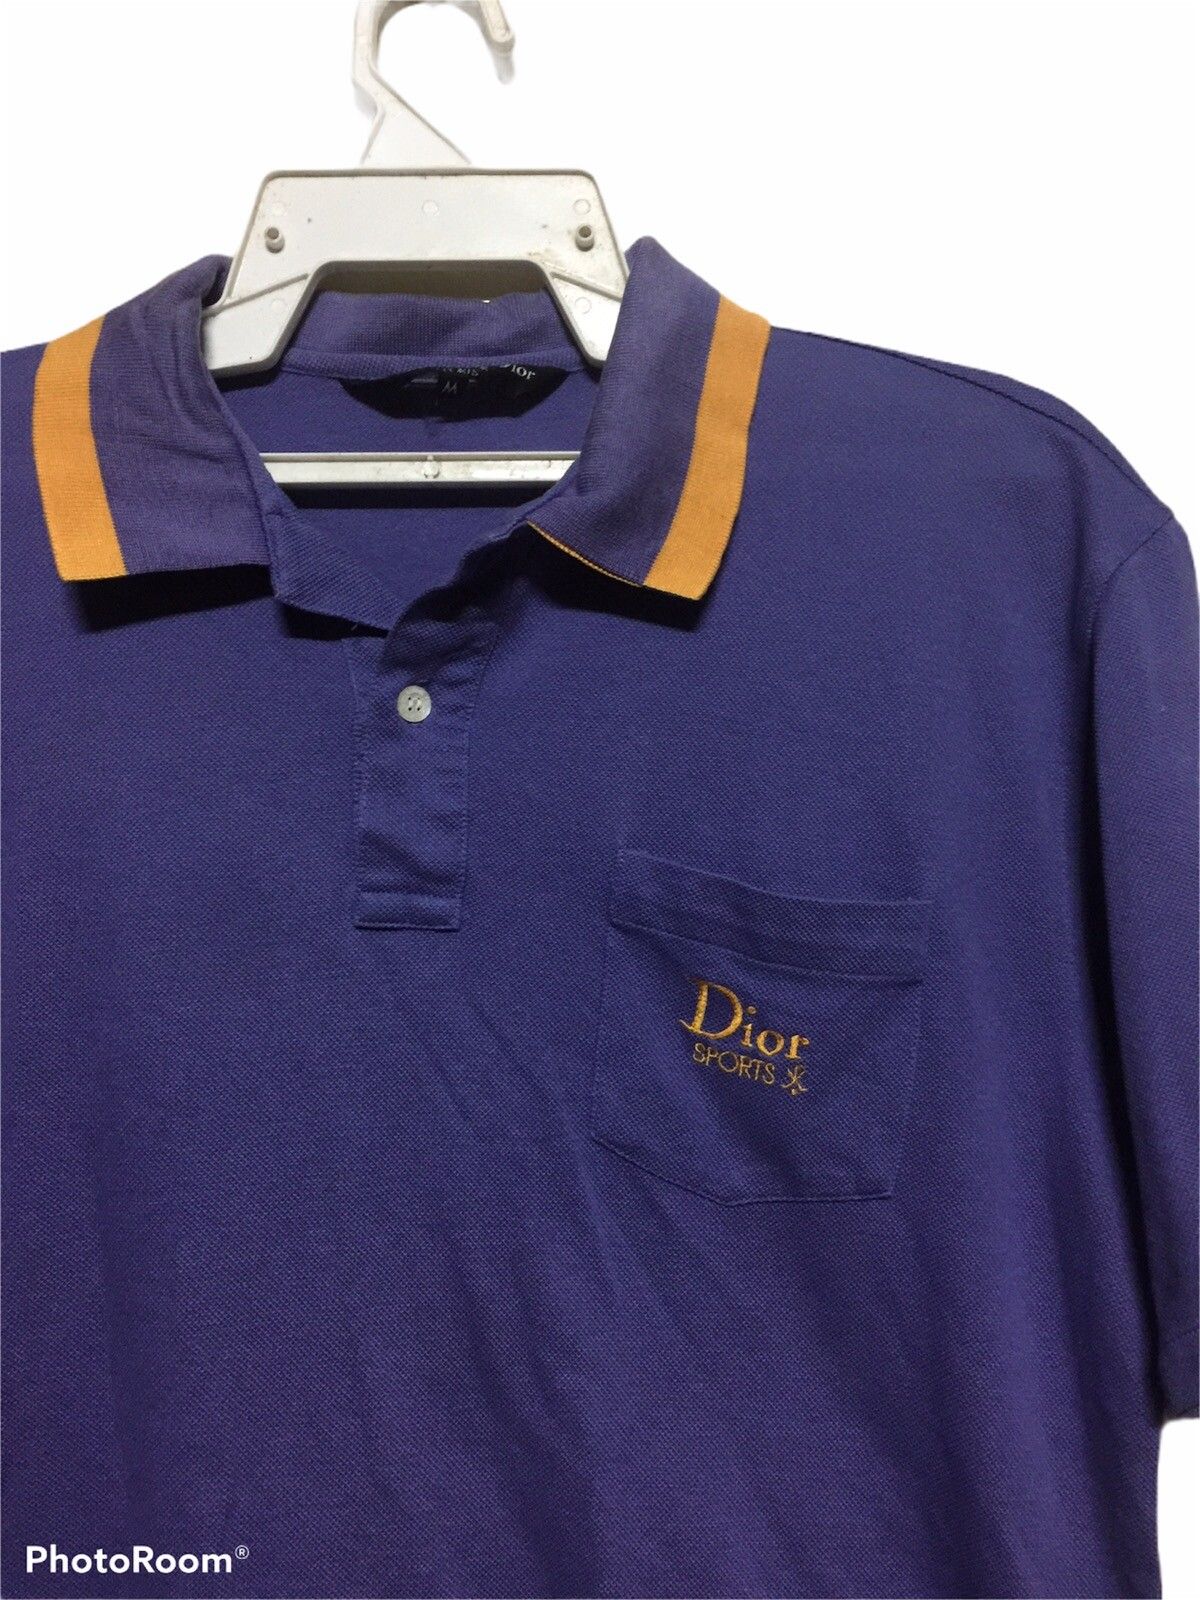 Christian Dior Dior Homme Classic Polo Shirt, $135